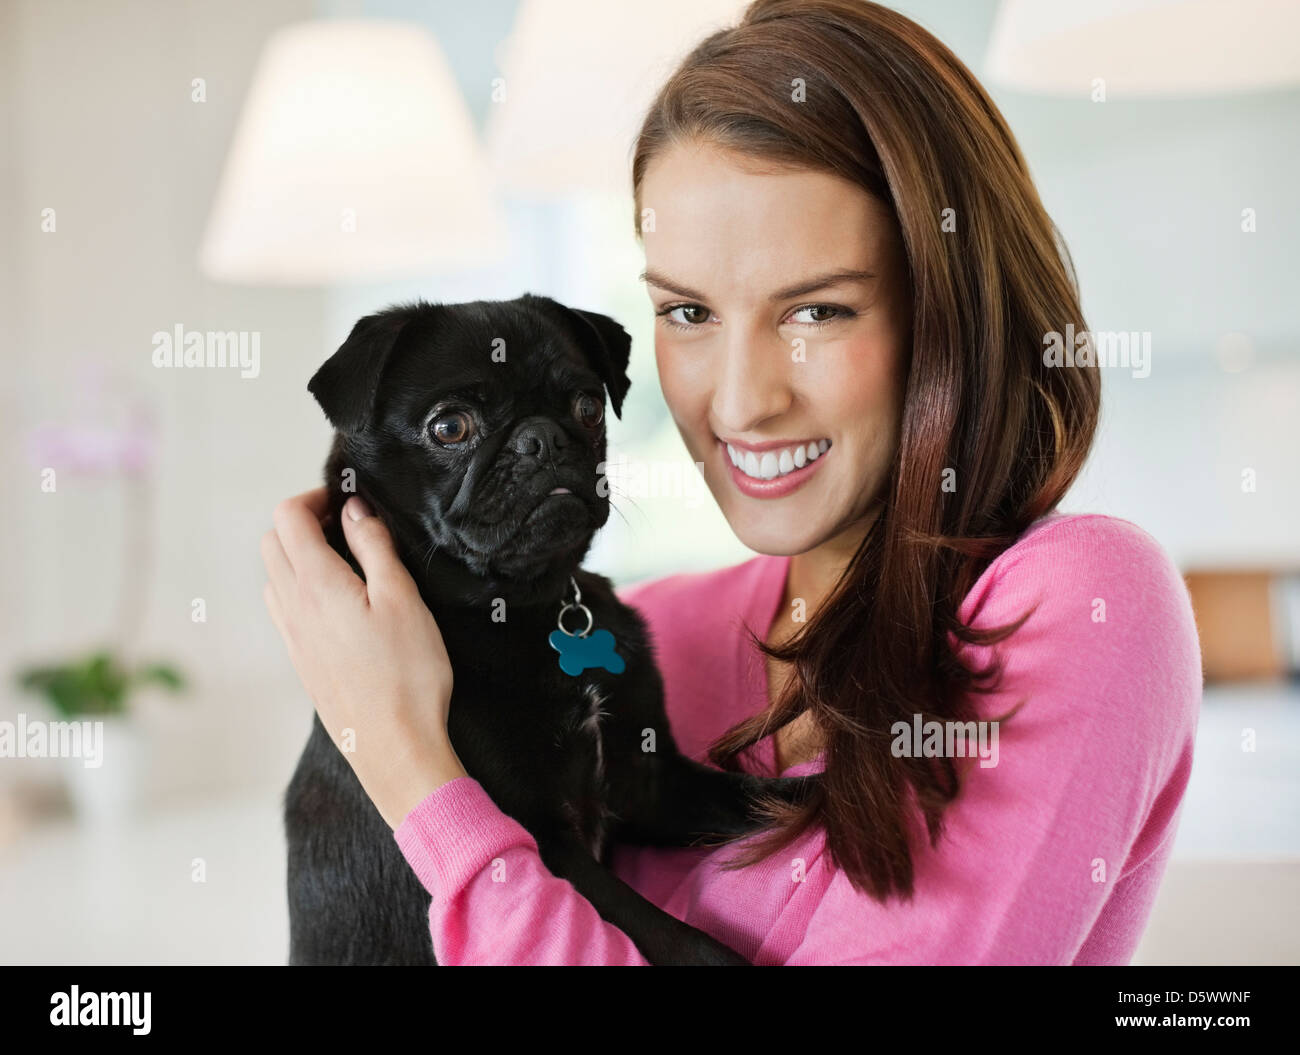 Smiling woman holding dog indoors Stock Photo